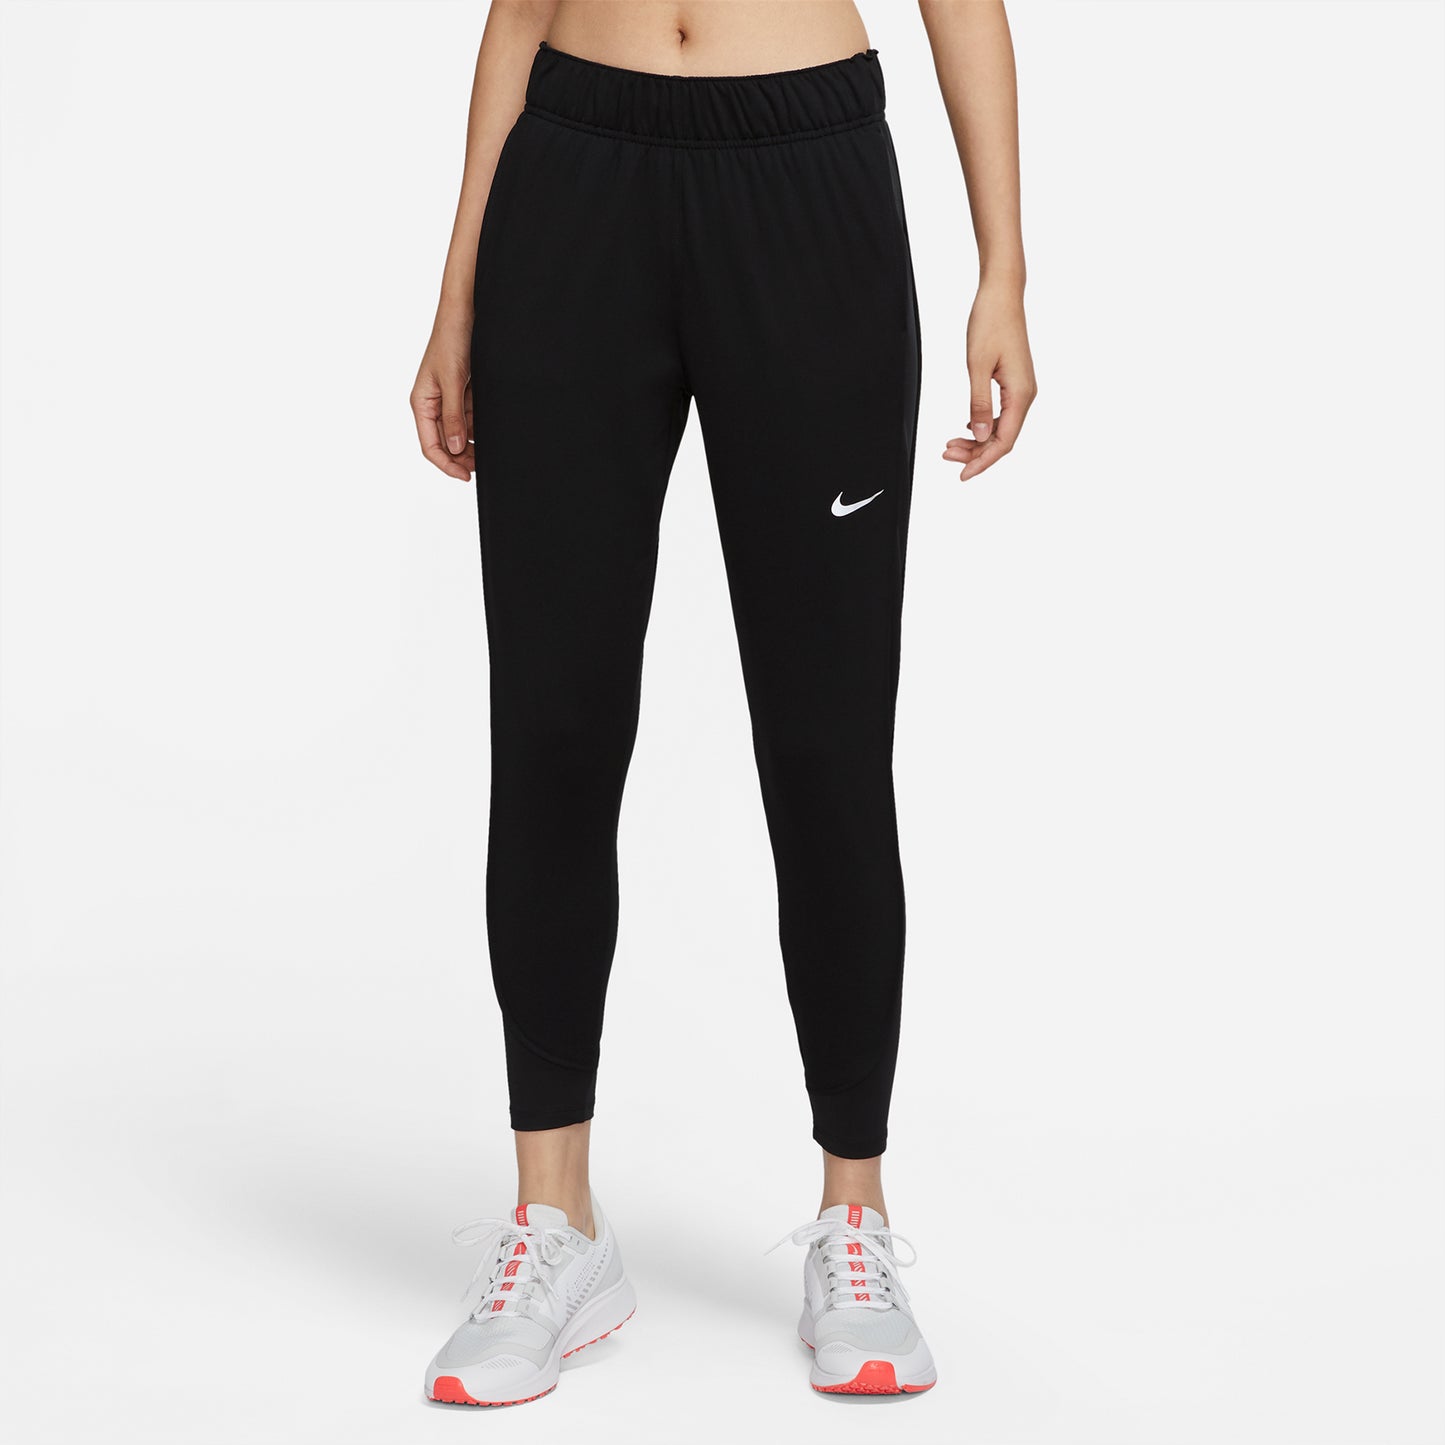 Women's Reflective Tights & Leggings. Nike BE